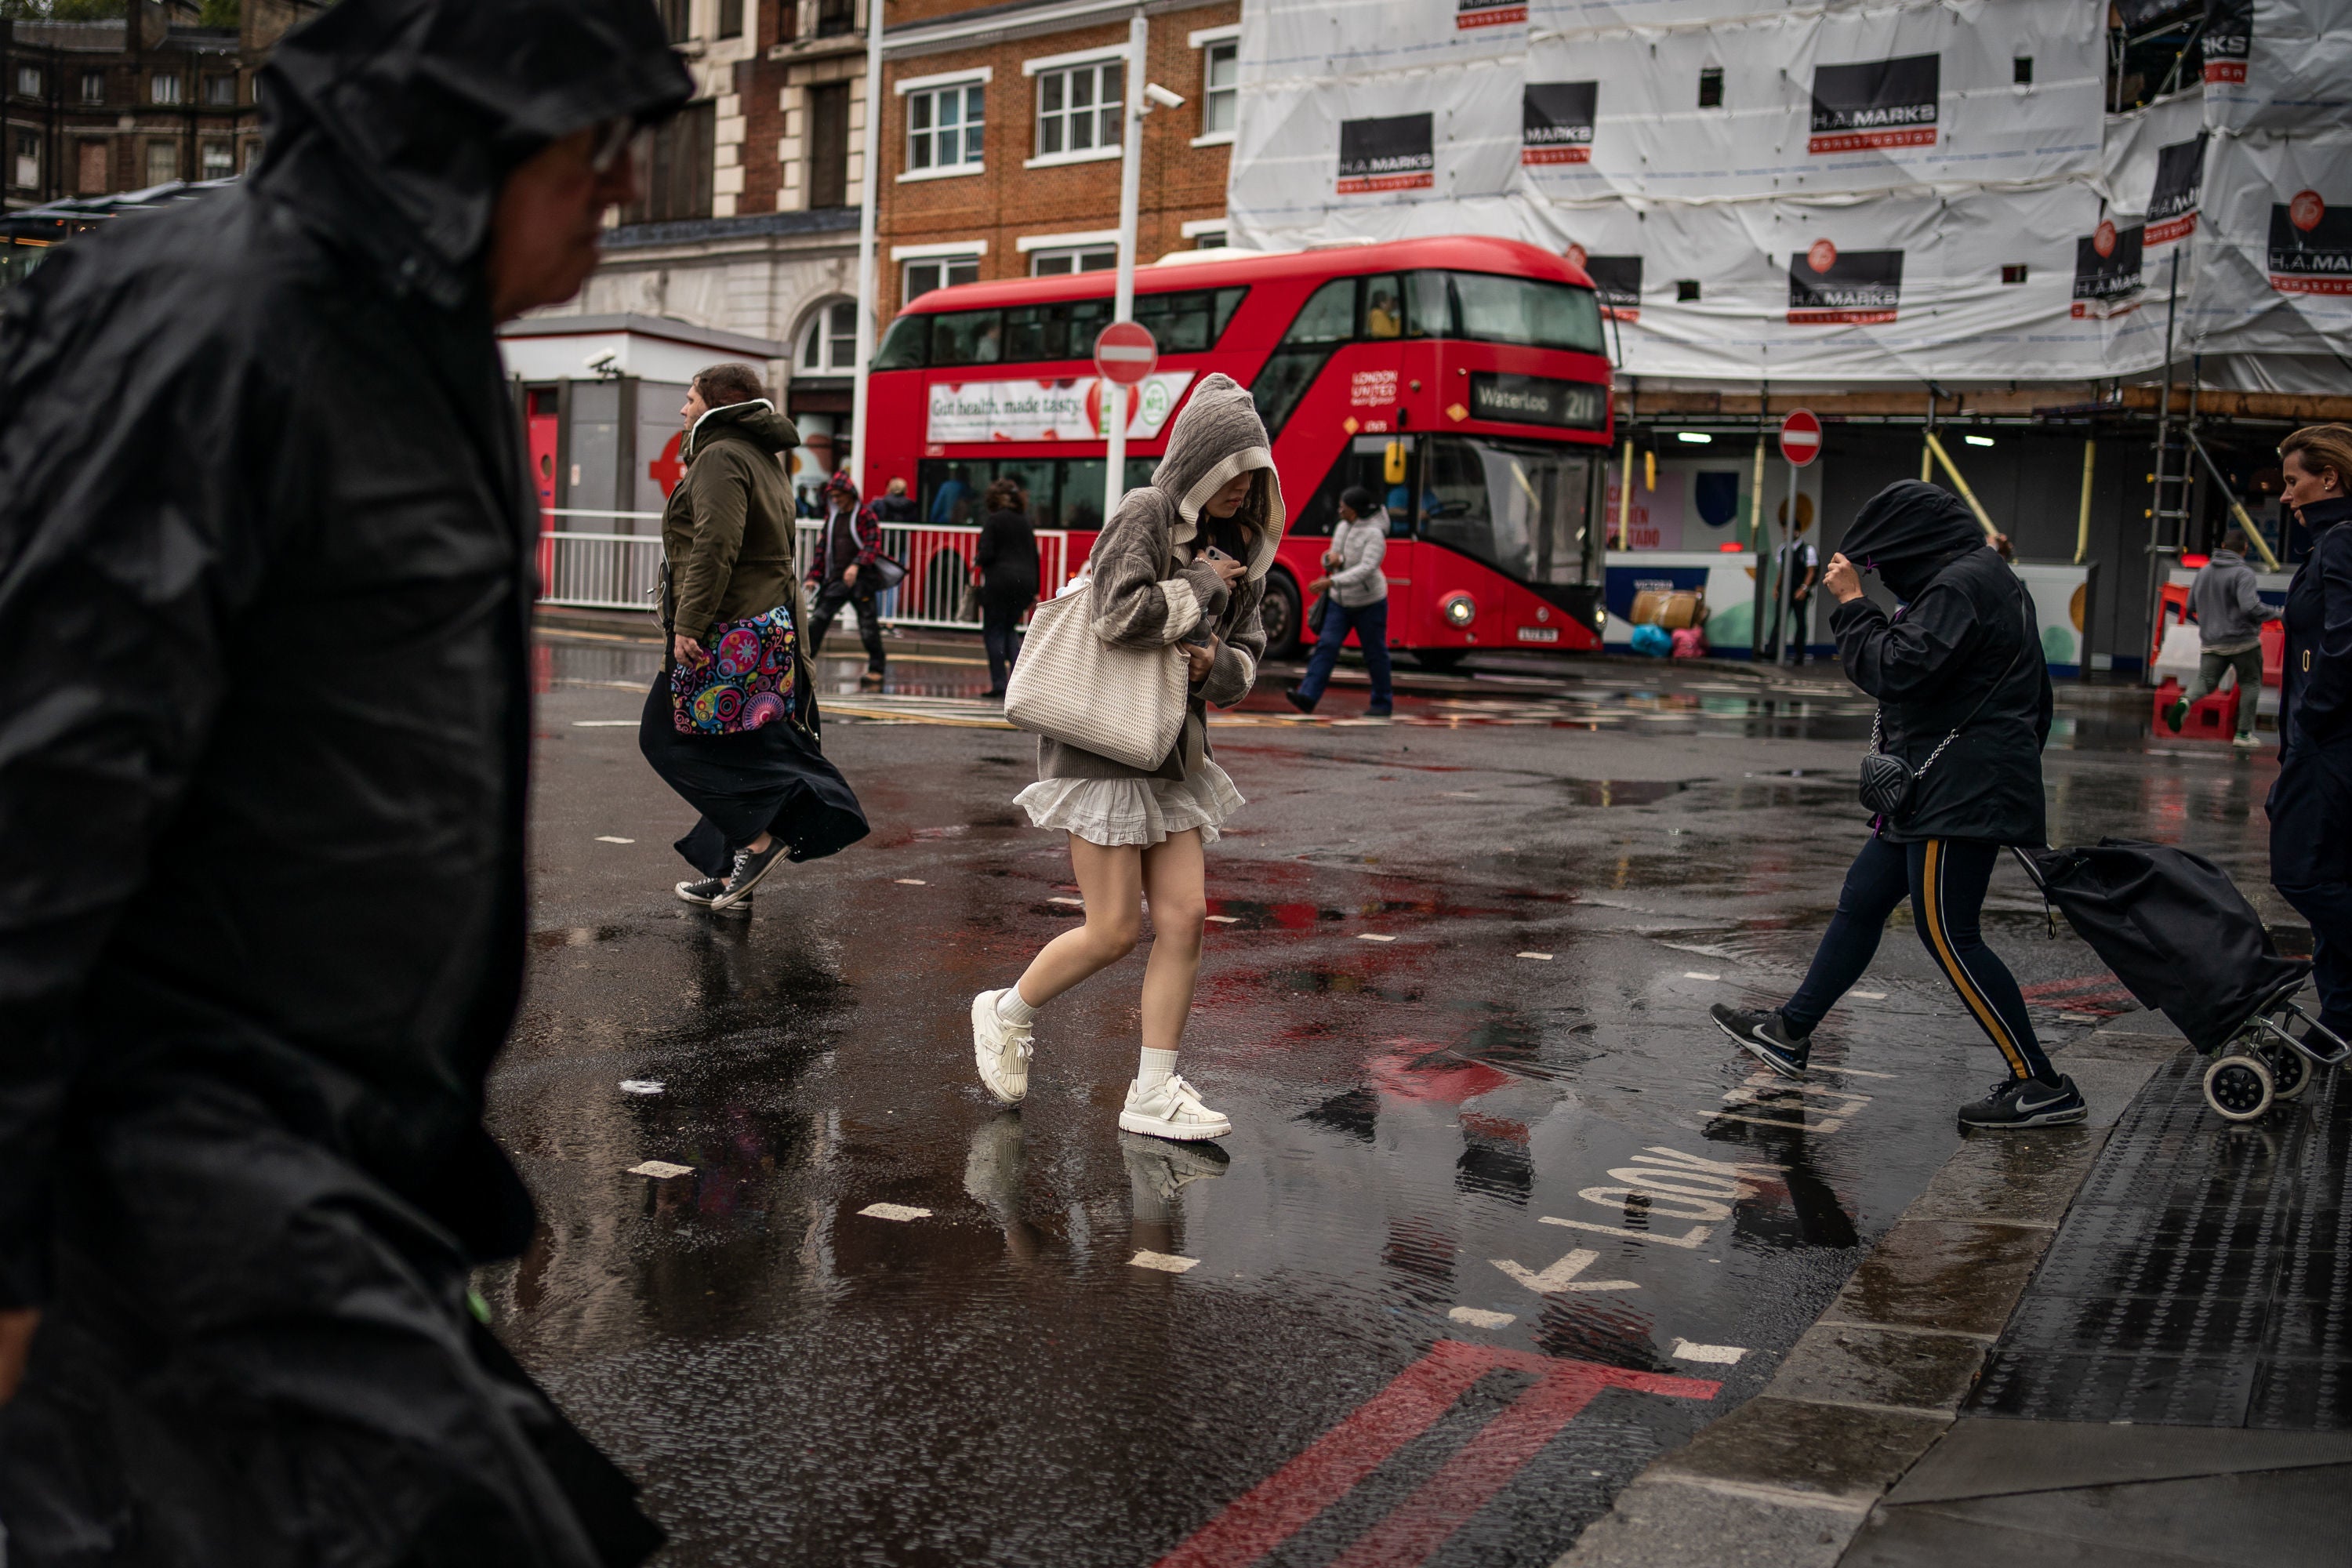 People walk through wet weather in Victoria, London.